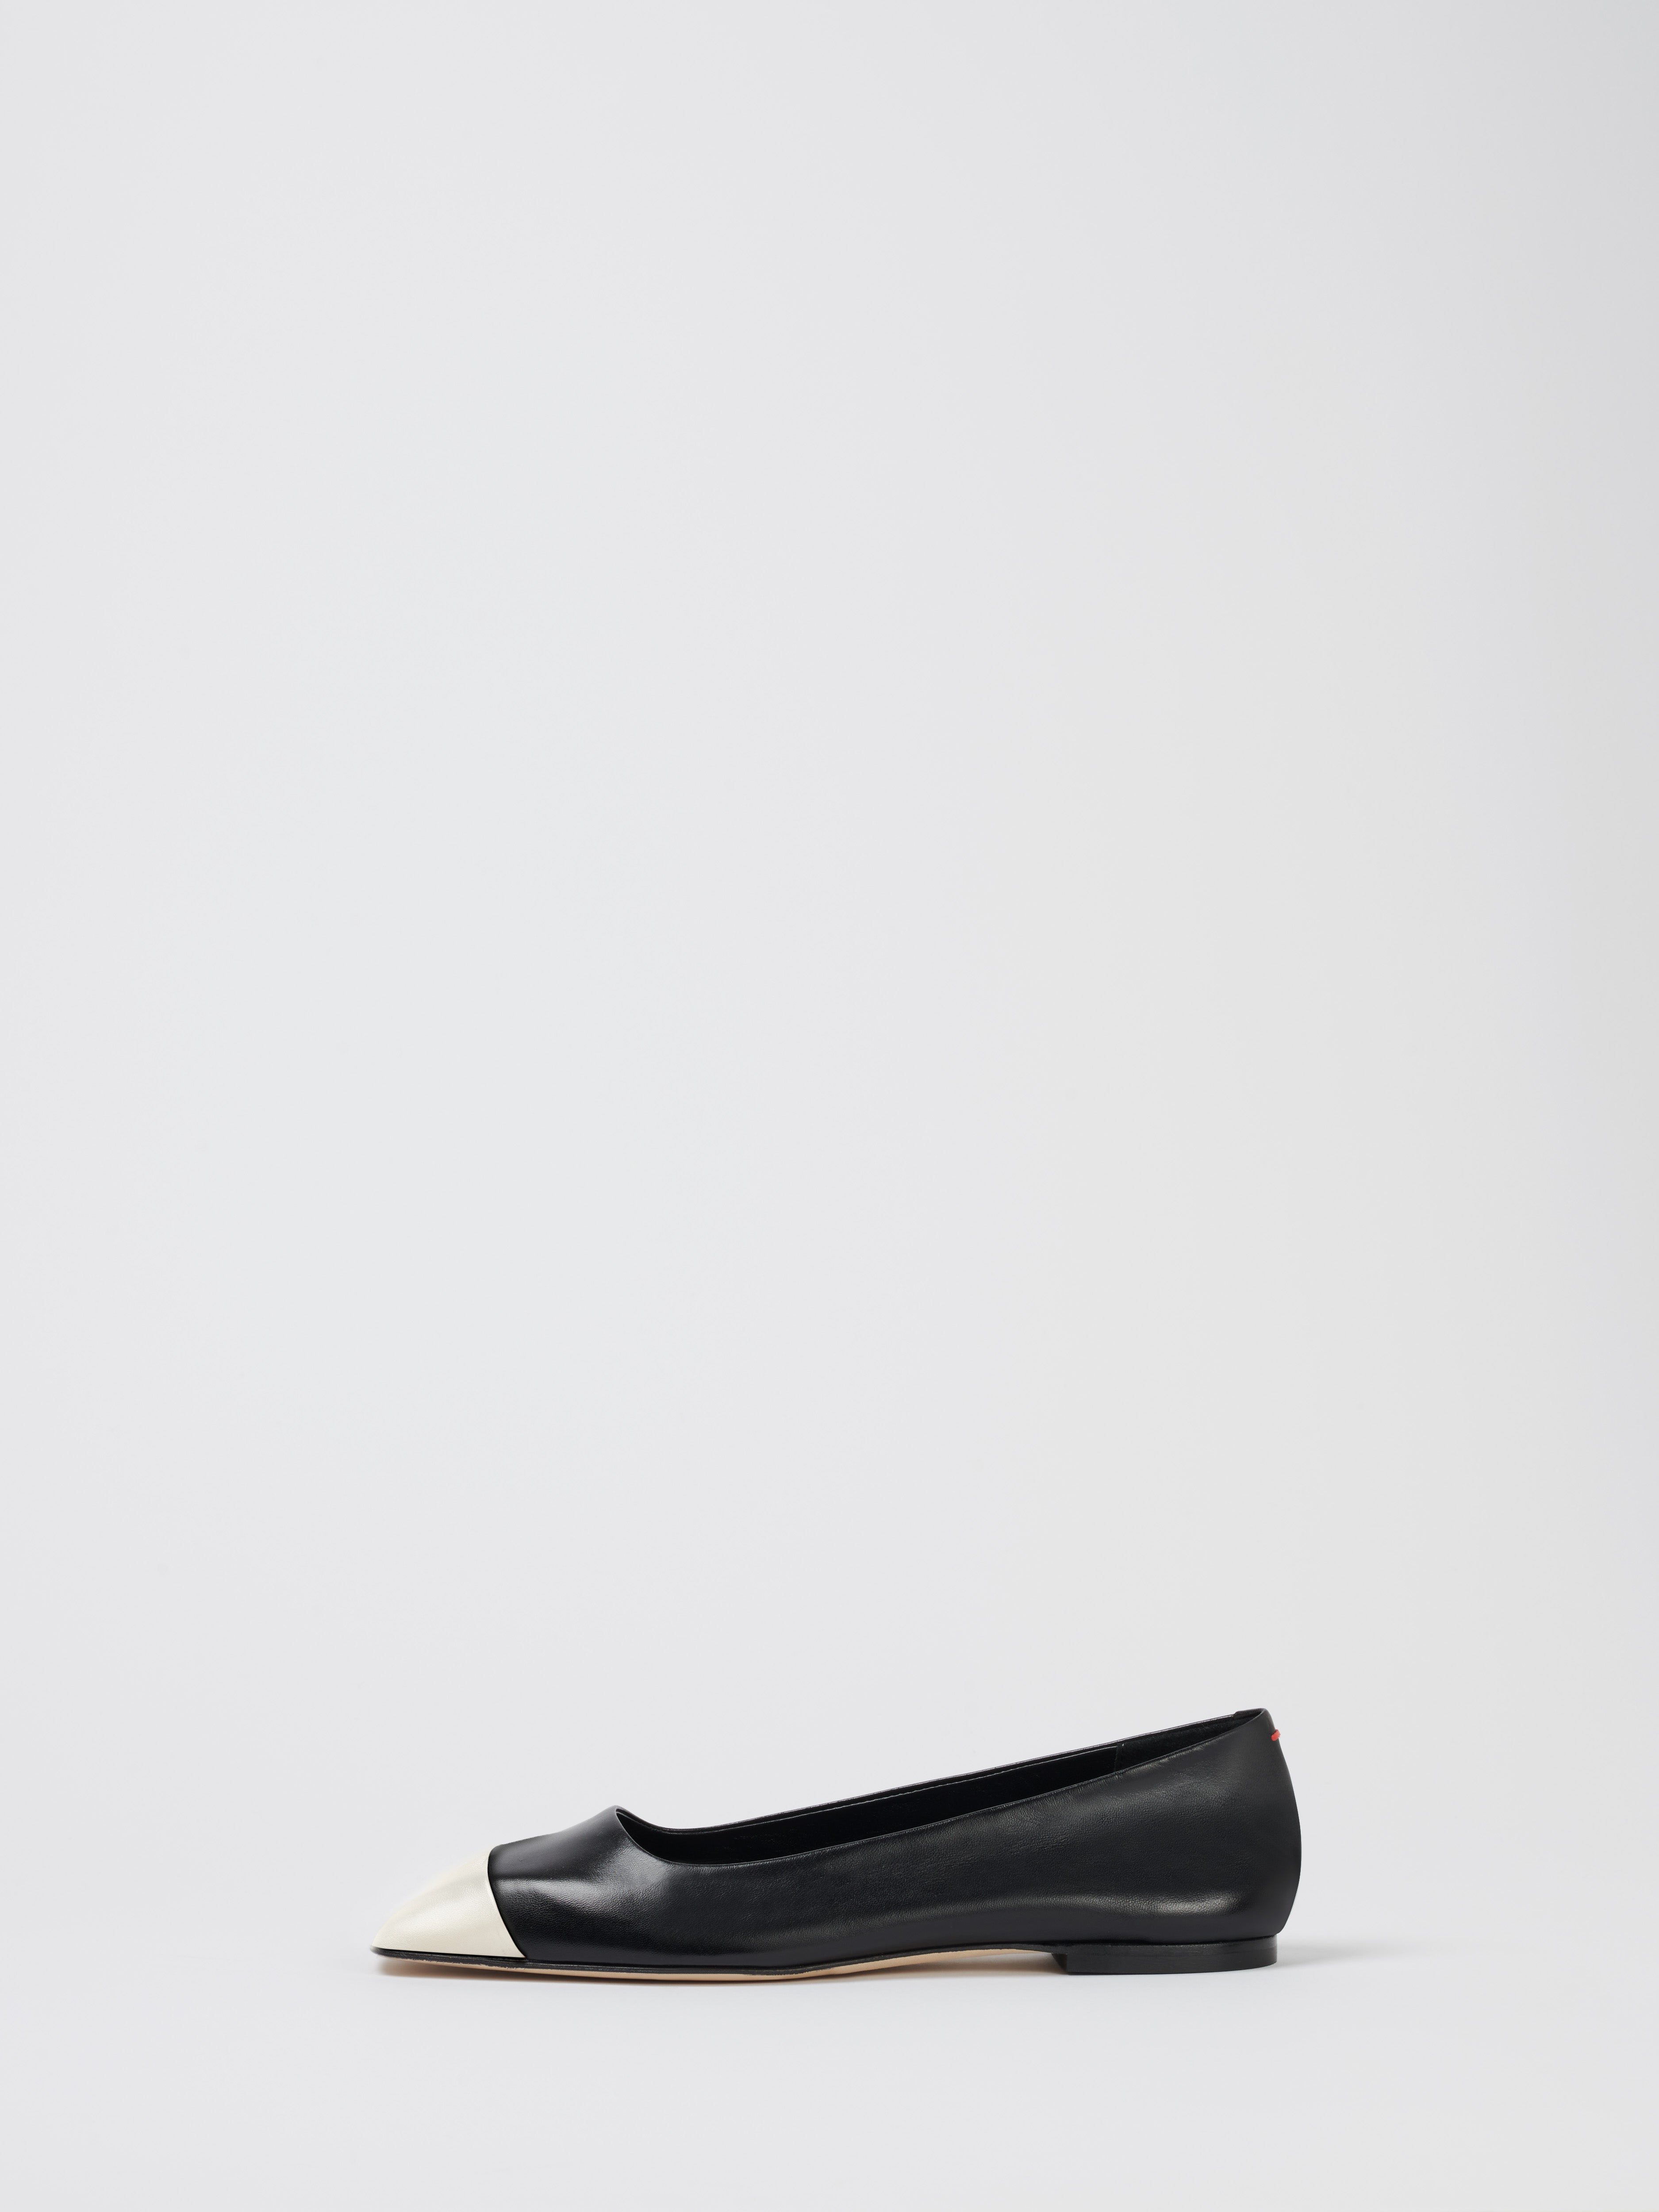 Chanel 23p CC Cap Toe Lambskin Leather Ballet Flats Size 11